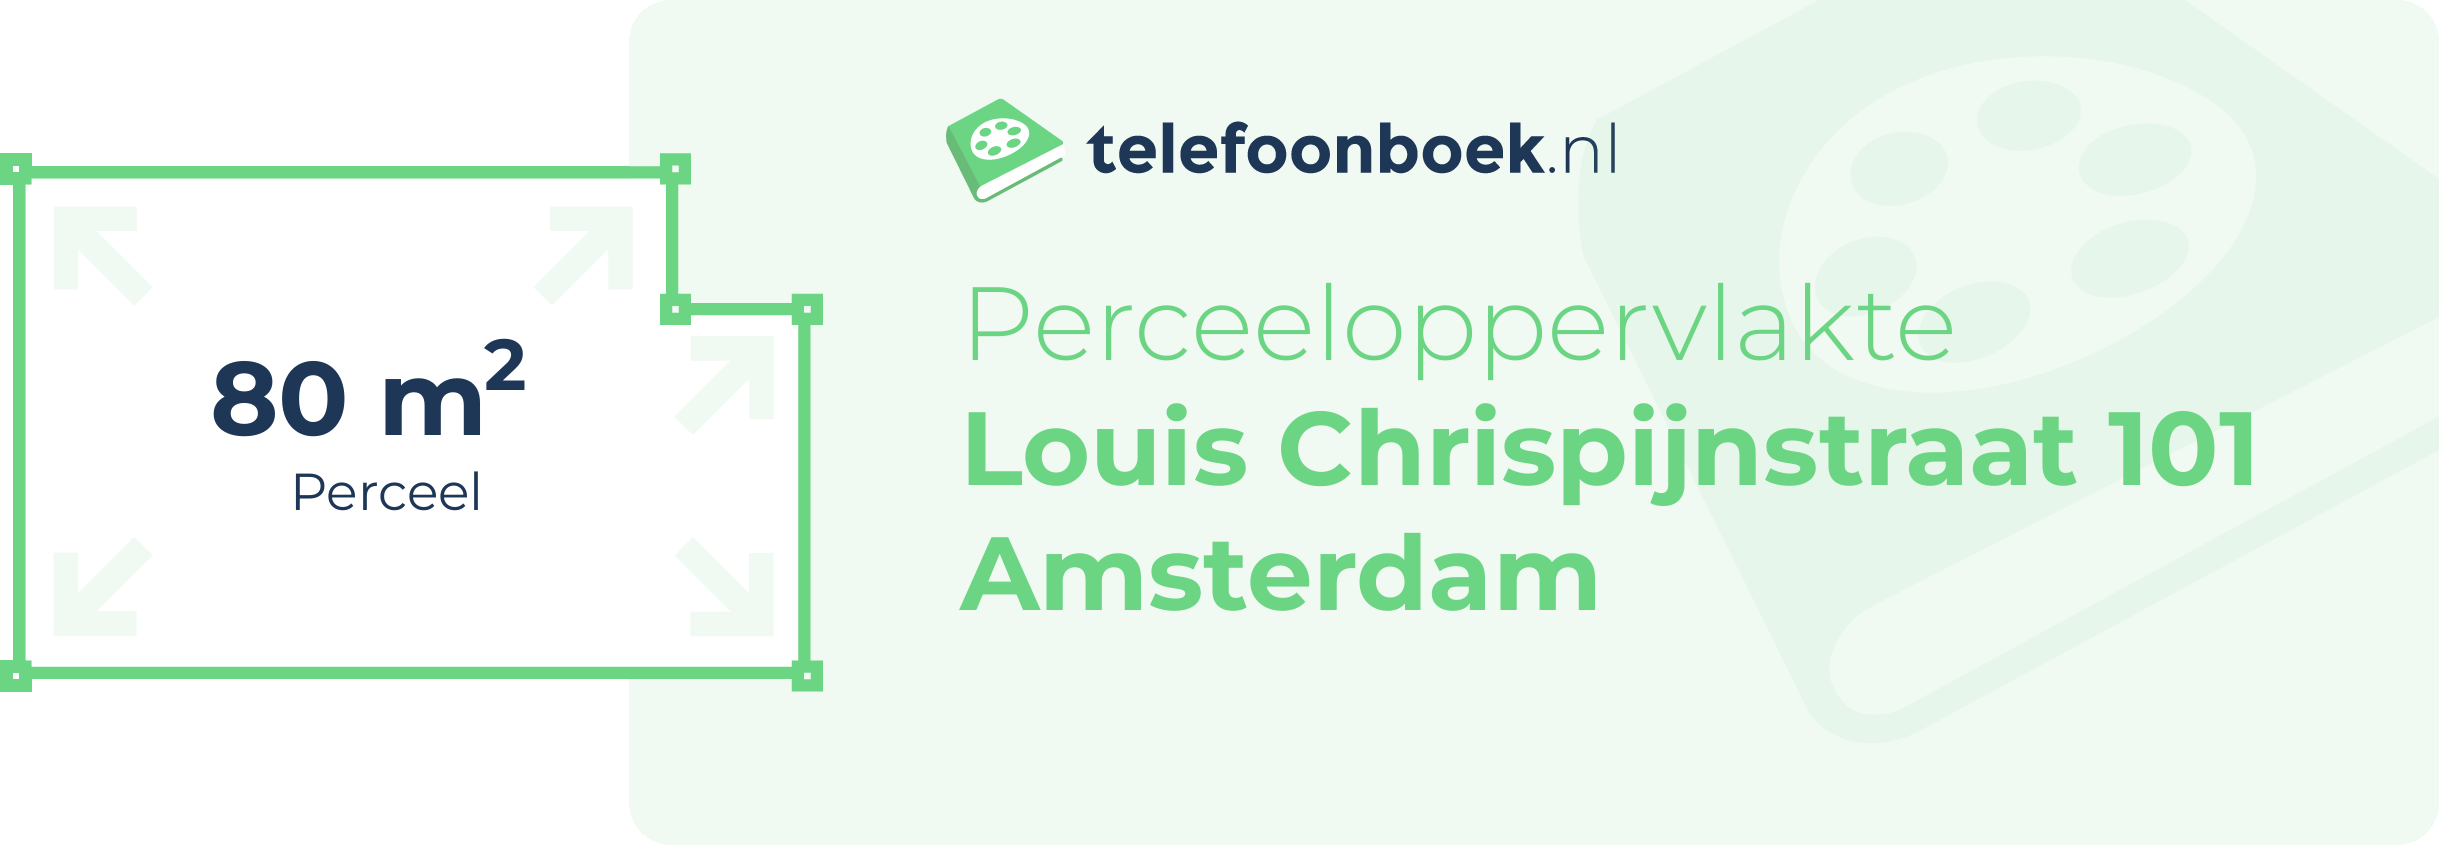 Perceeloppervlakte Louis Chrispijnstraat 101 Amsterdam